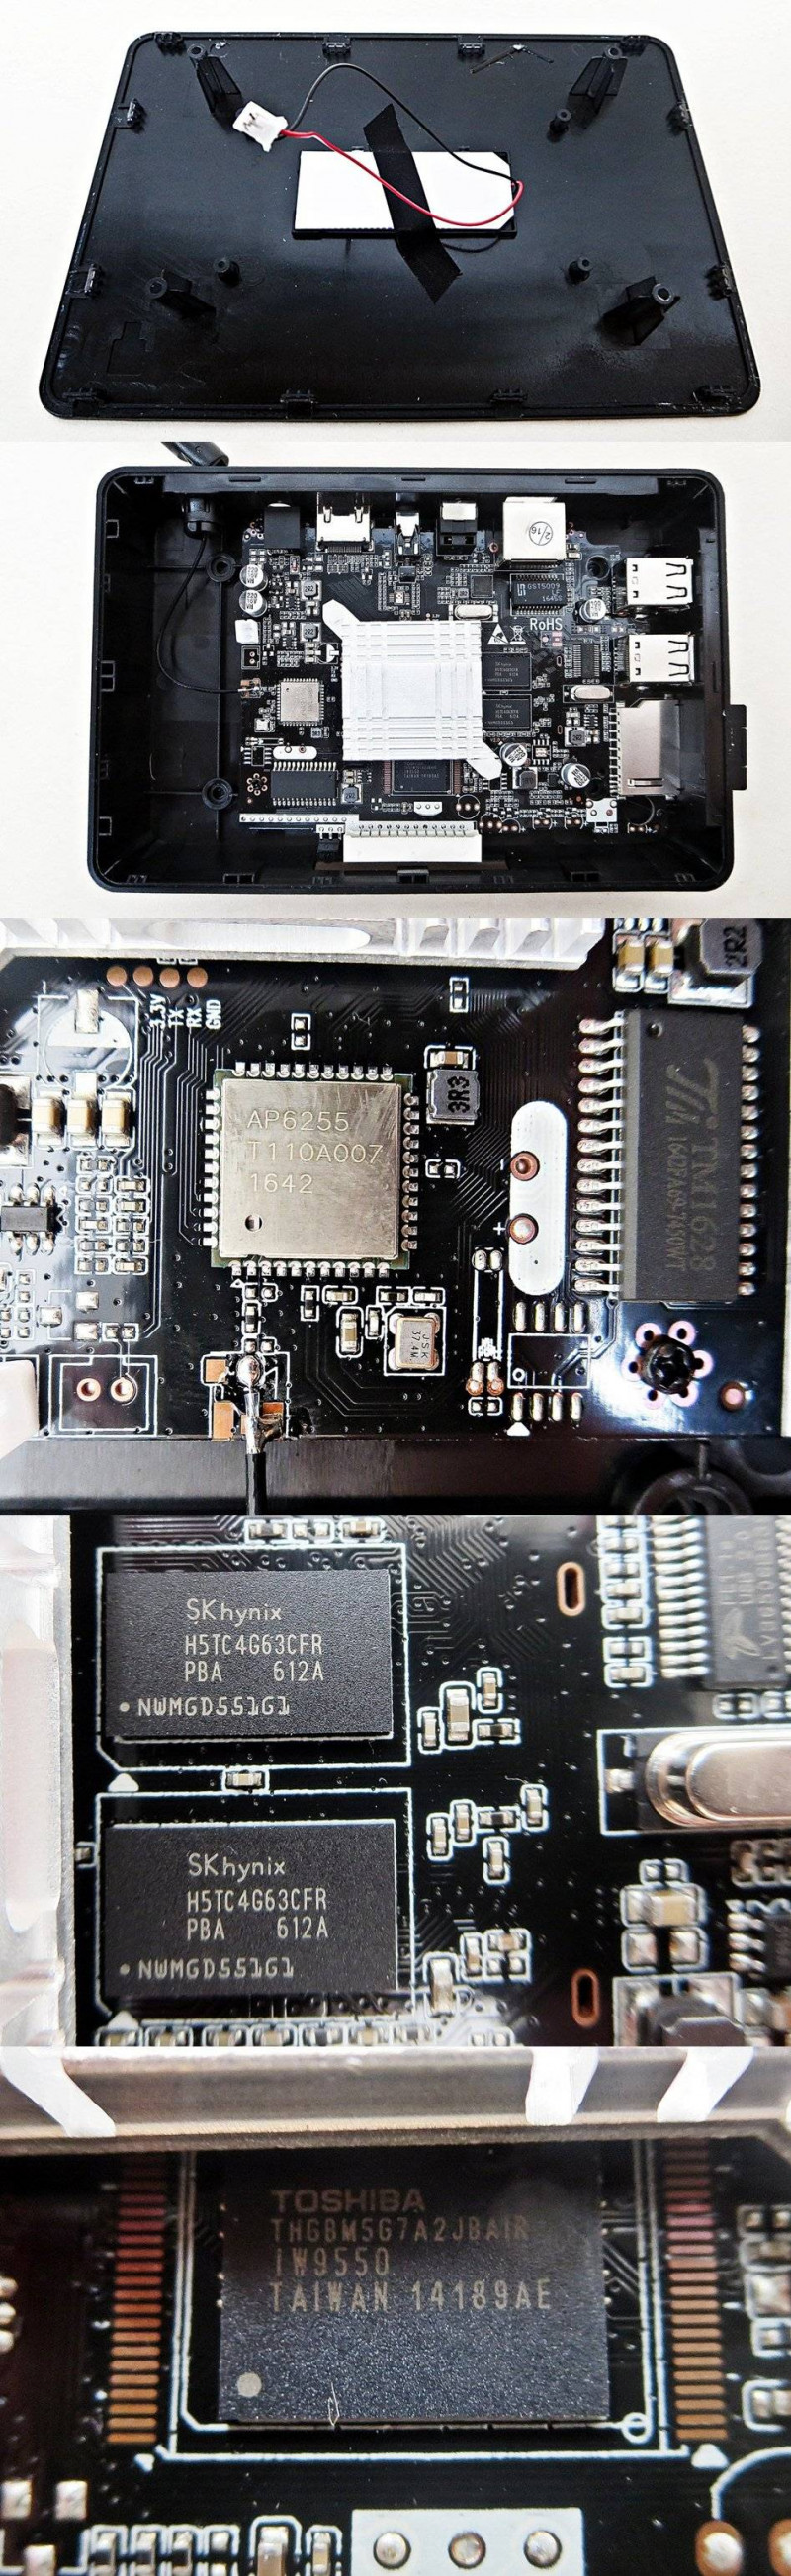 Banggood: Обзор приставки X92 на процессоре Amlogic S912